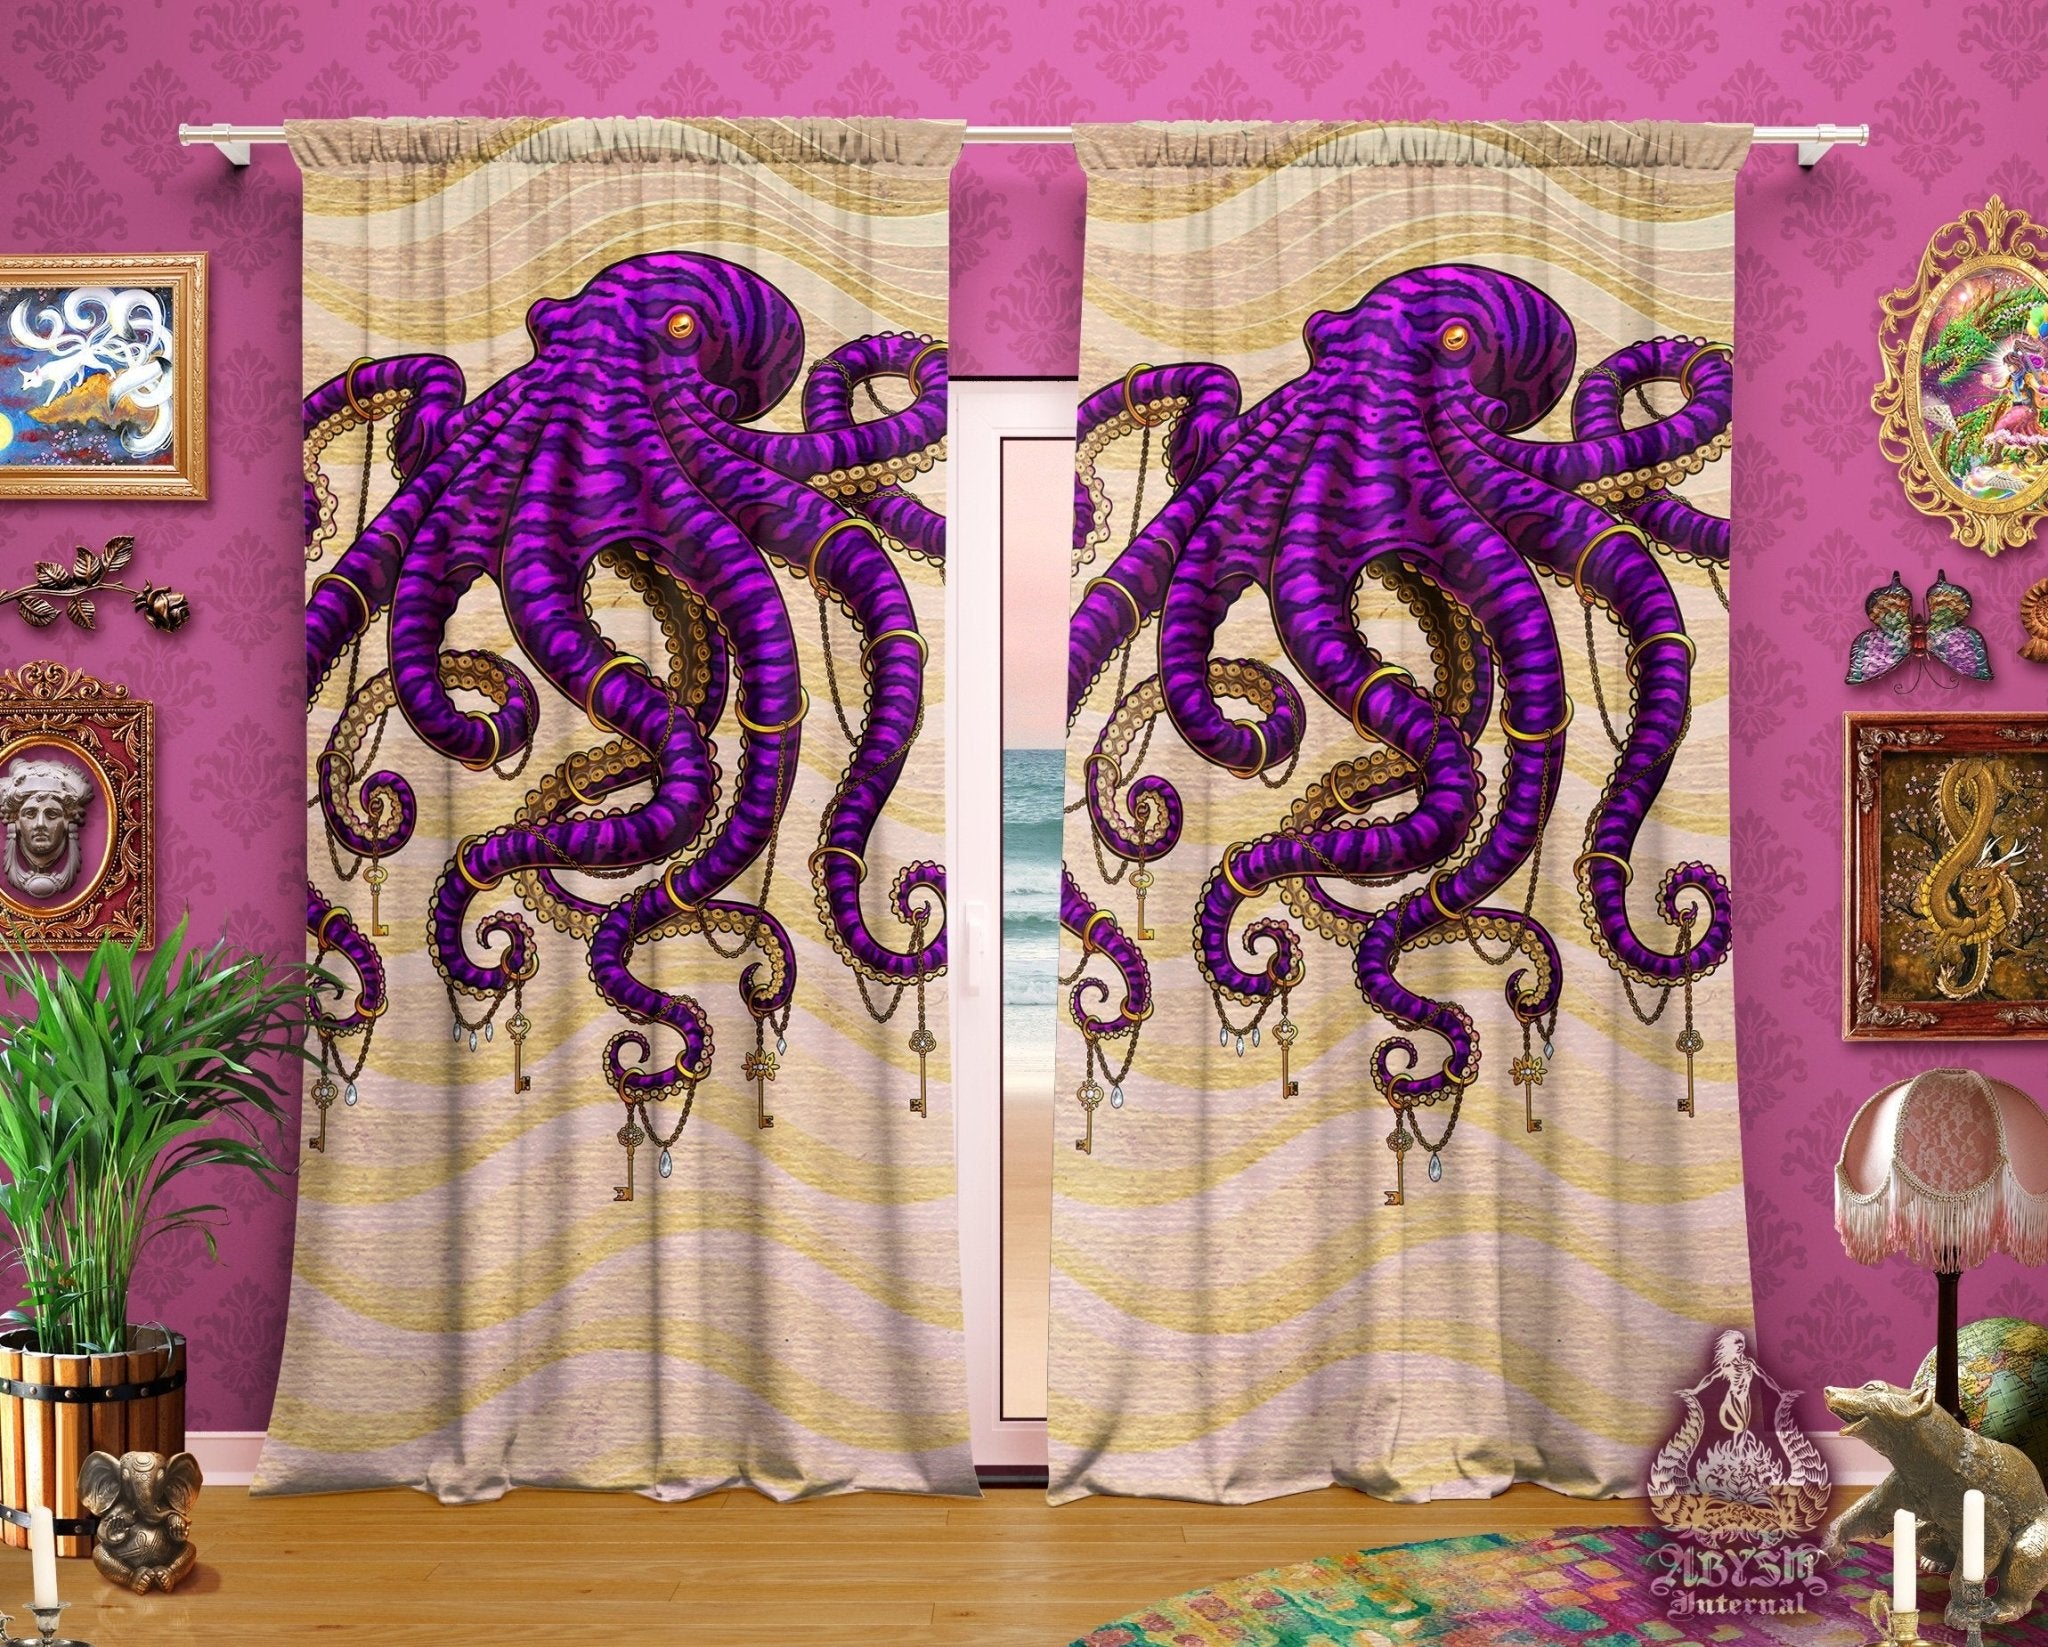 Octopus Blackout Curtains, Long Window Panels, Hippie Room Decor, Beach and Coastal Business Decor, Art Print - Purple & Sand - Abysm Internal